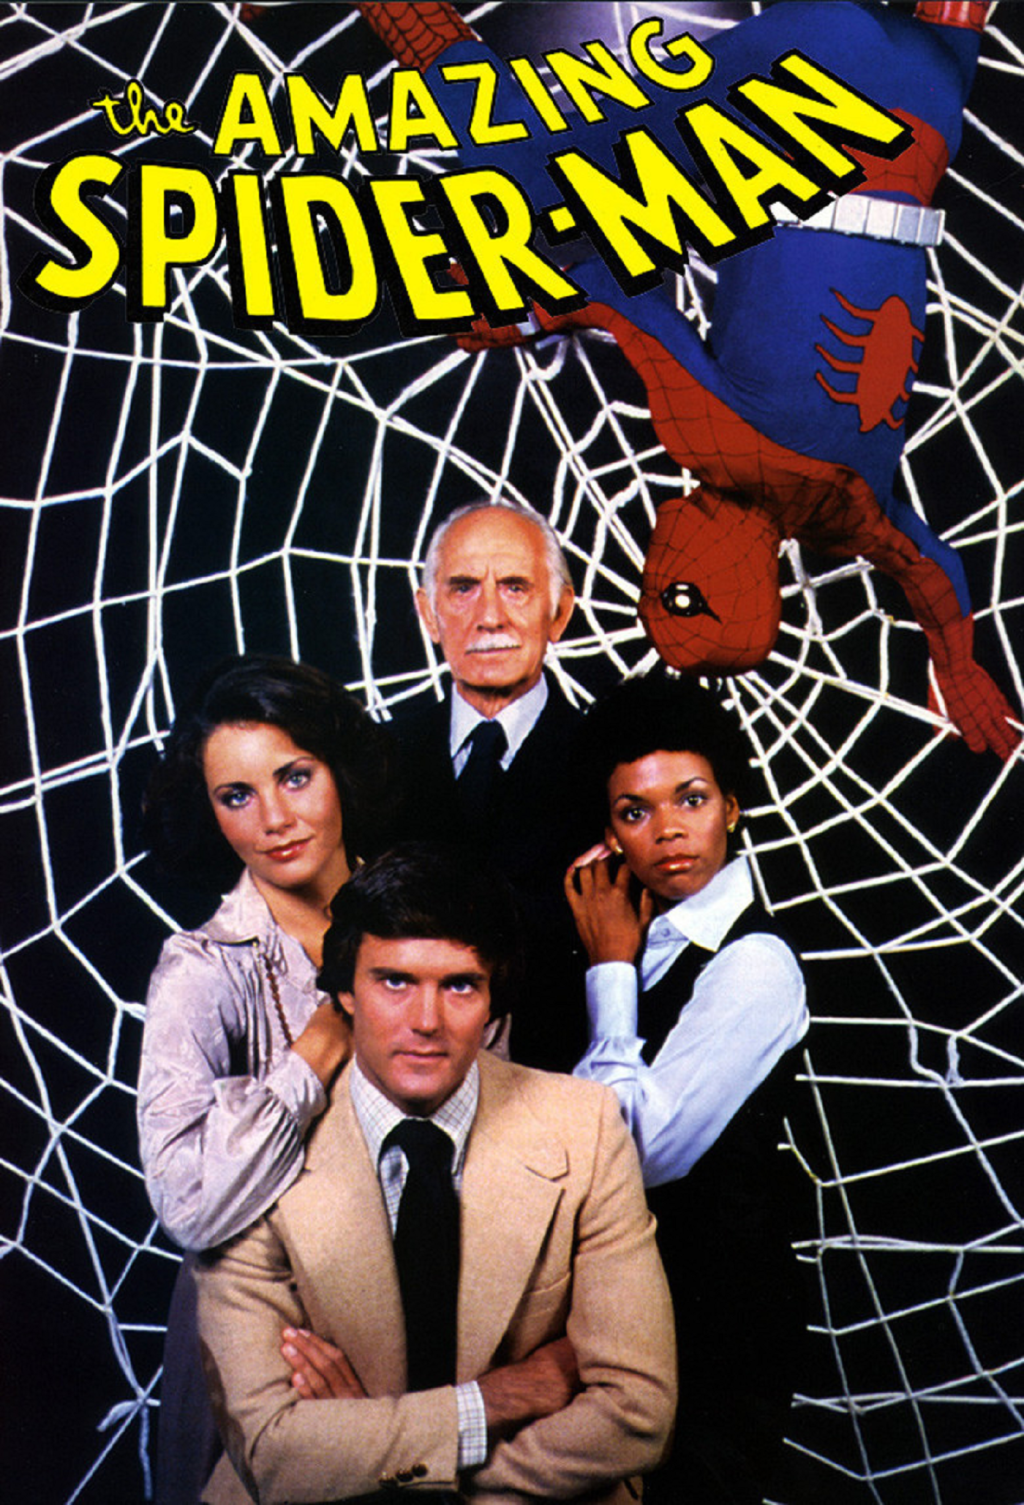 The Amazing Spider-Man (ABC, 1977-79).